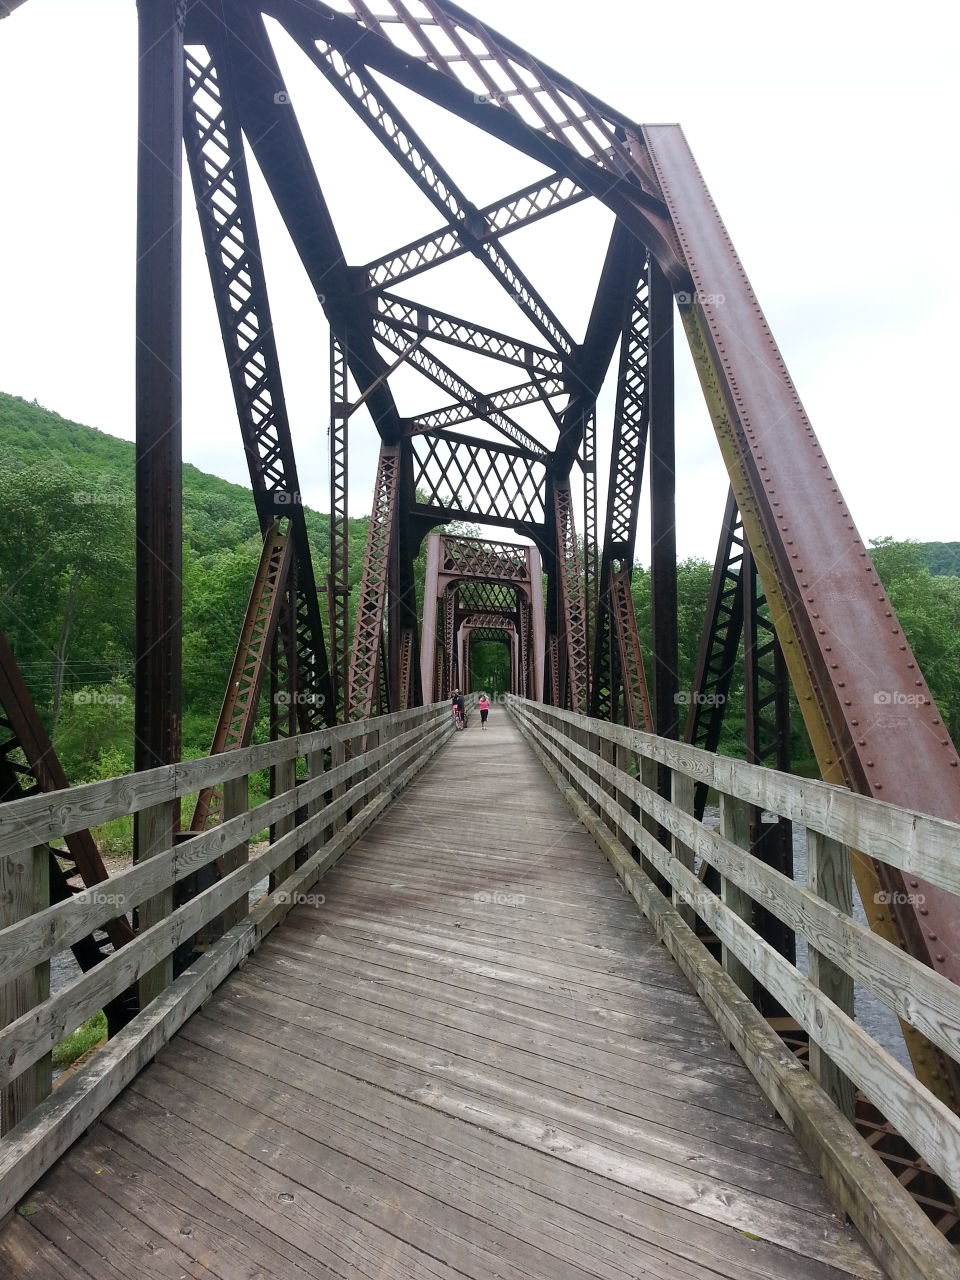 The bridge. Bike ride across the bridge